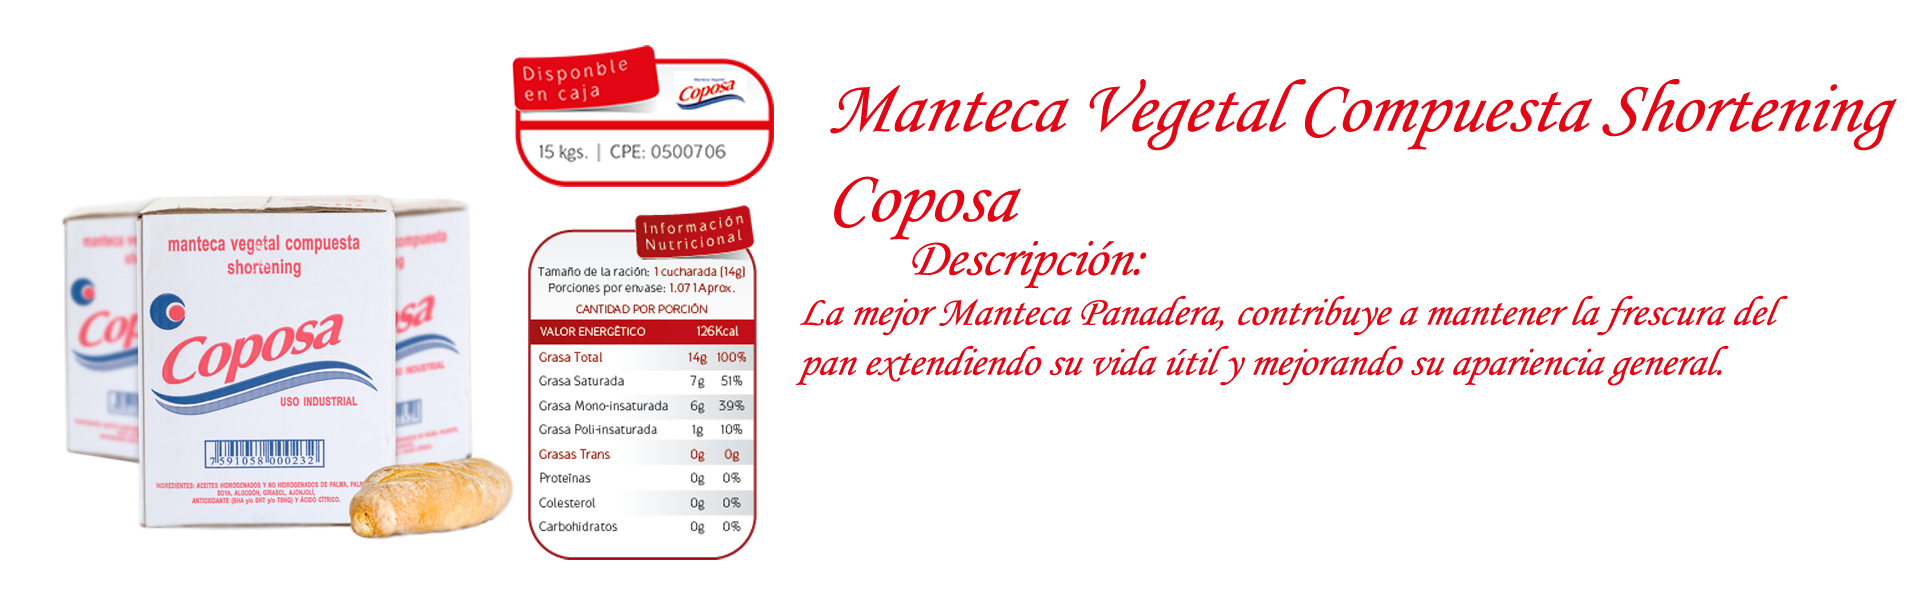 Manteca Vegetal Compuesta Shortening Coposa